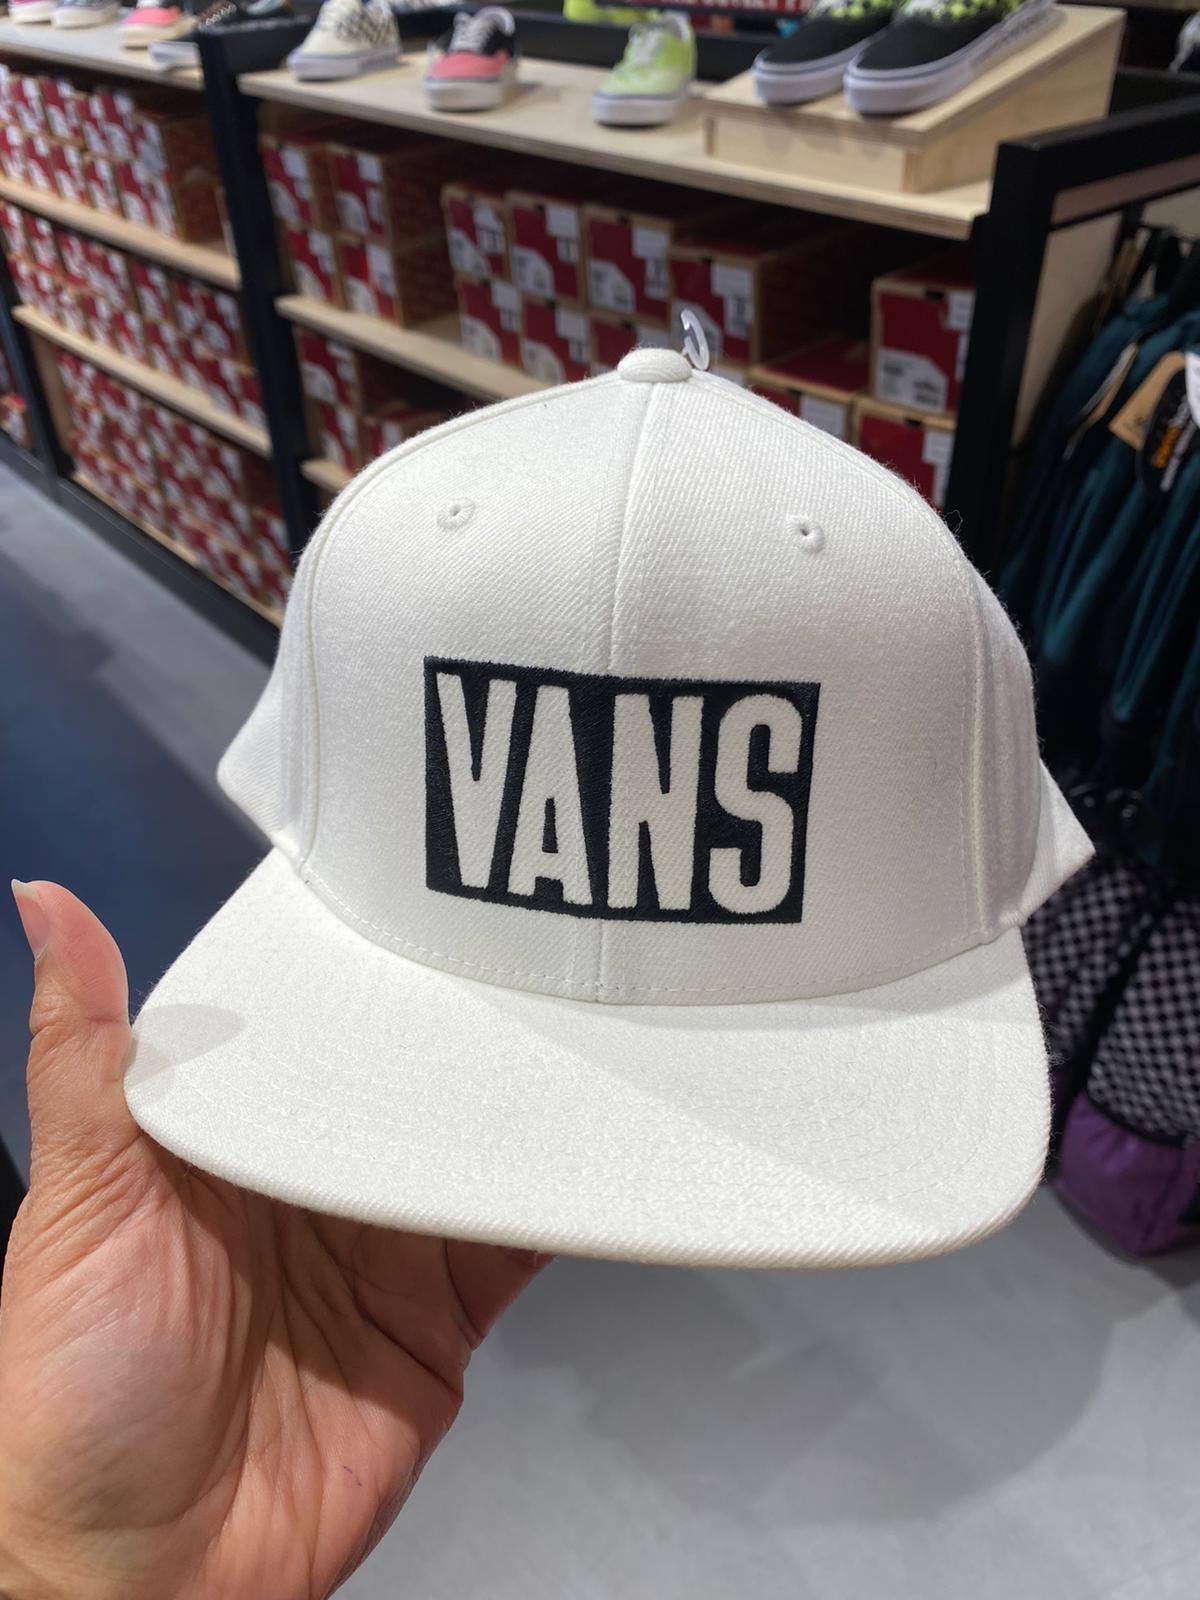 subway Mansion cleaner AzuraMart - VANS SnapBack Hat - White - One Size